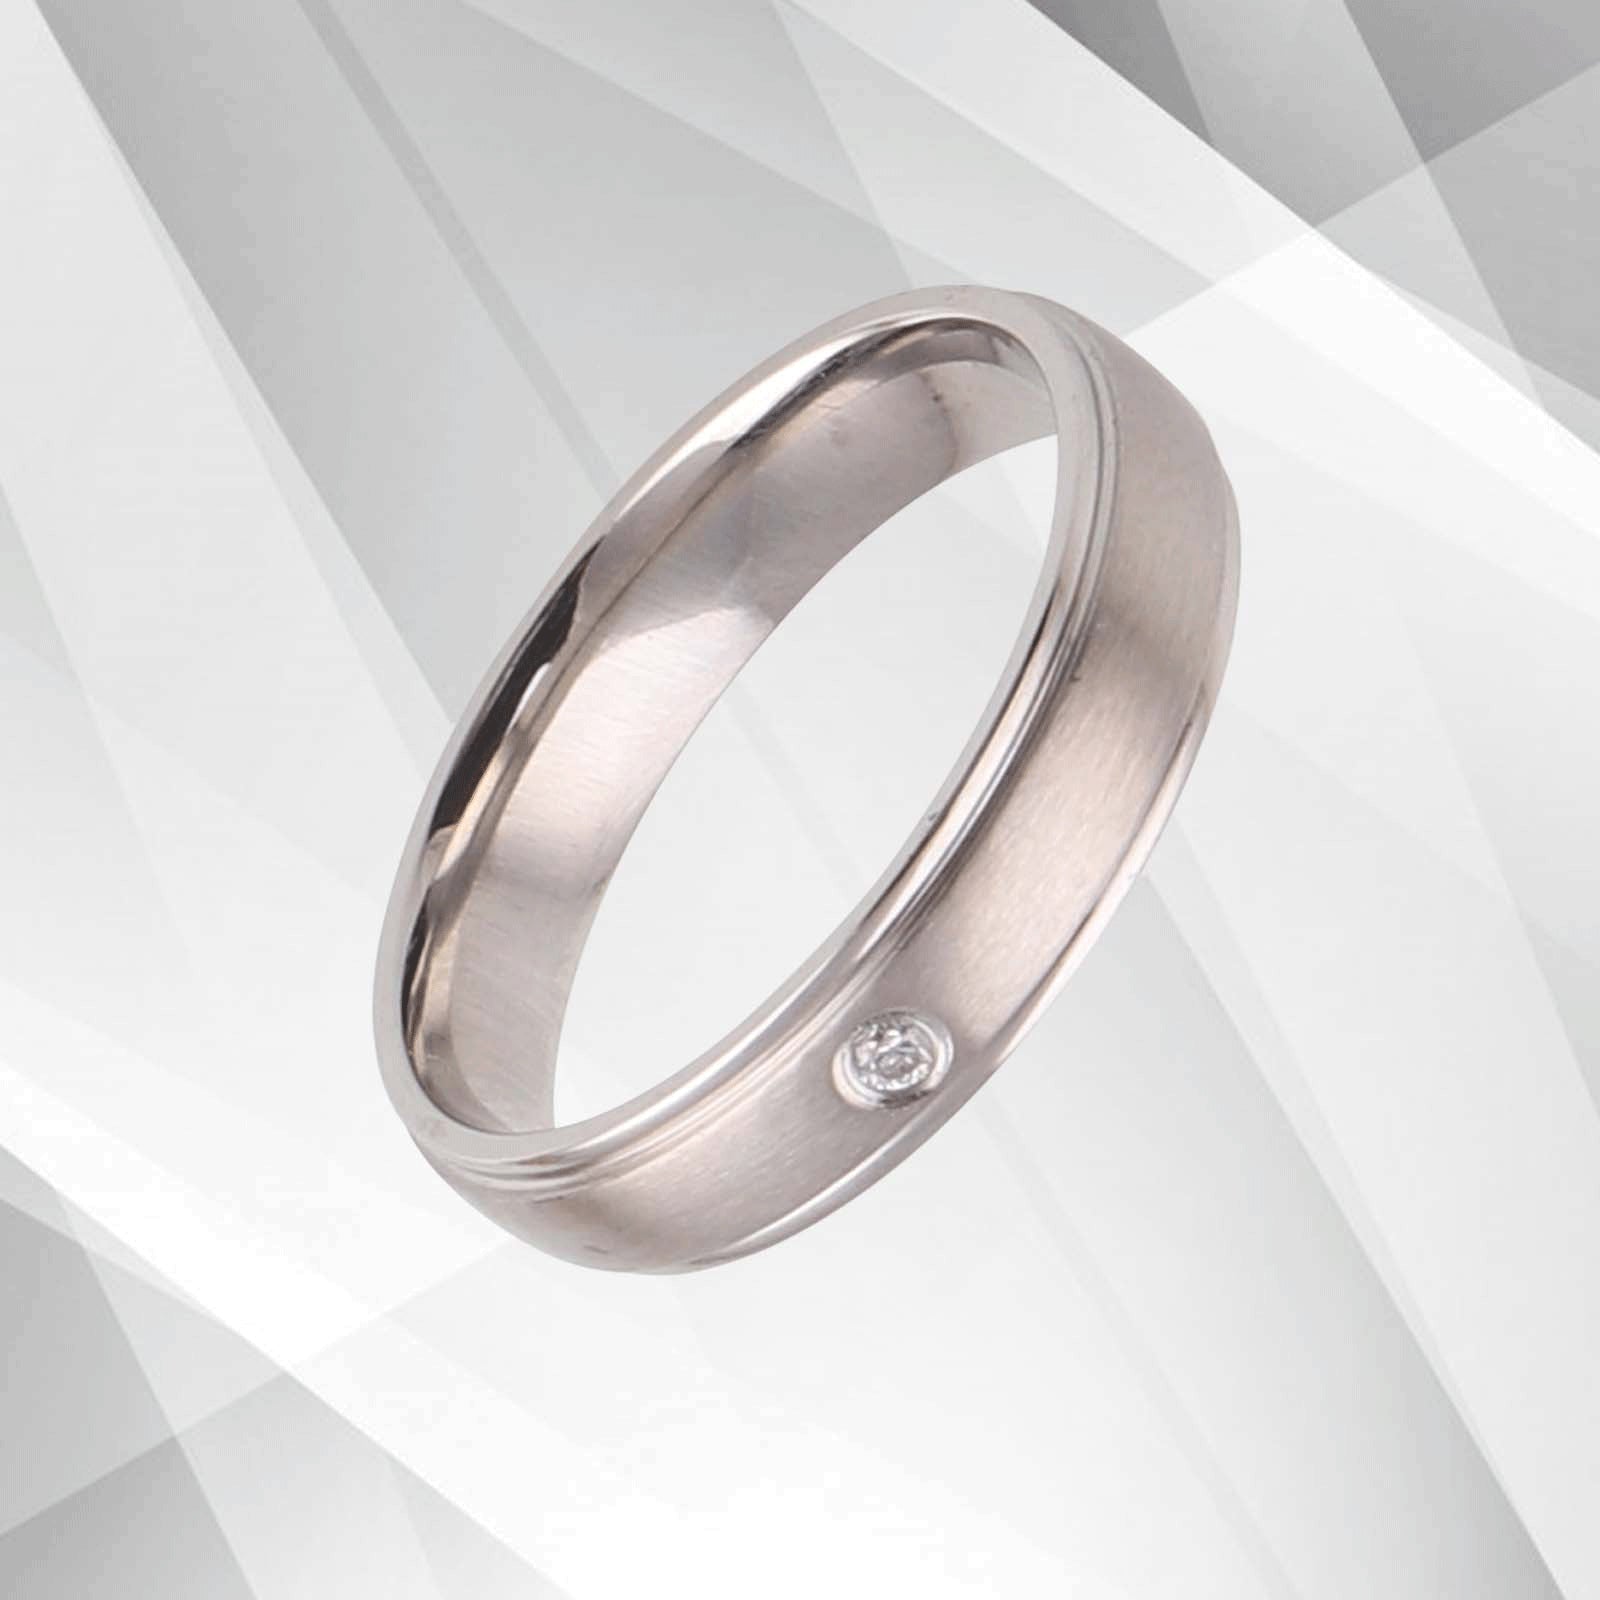 Gorgeous Sleek Titanium CZ Diamond Wedding Band Ring - 4mm Wide Matt Finish with 18Ct White Gold Inside - Women's Engagement Anniversary Gift - Jewelry & Watches - Bijou Her -  -  - 